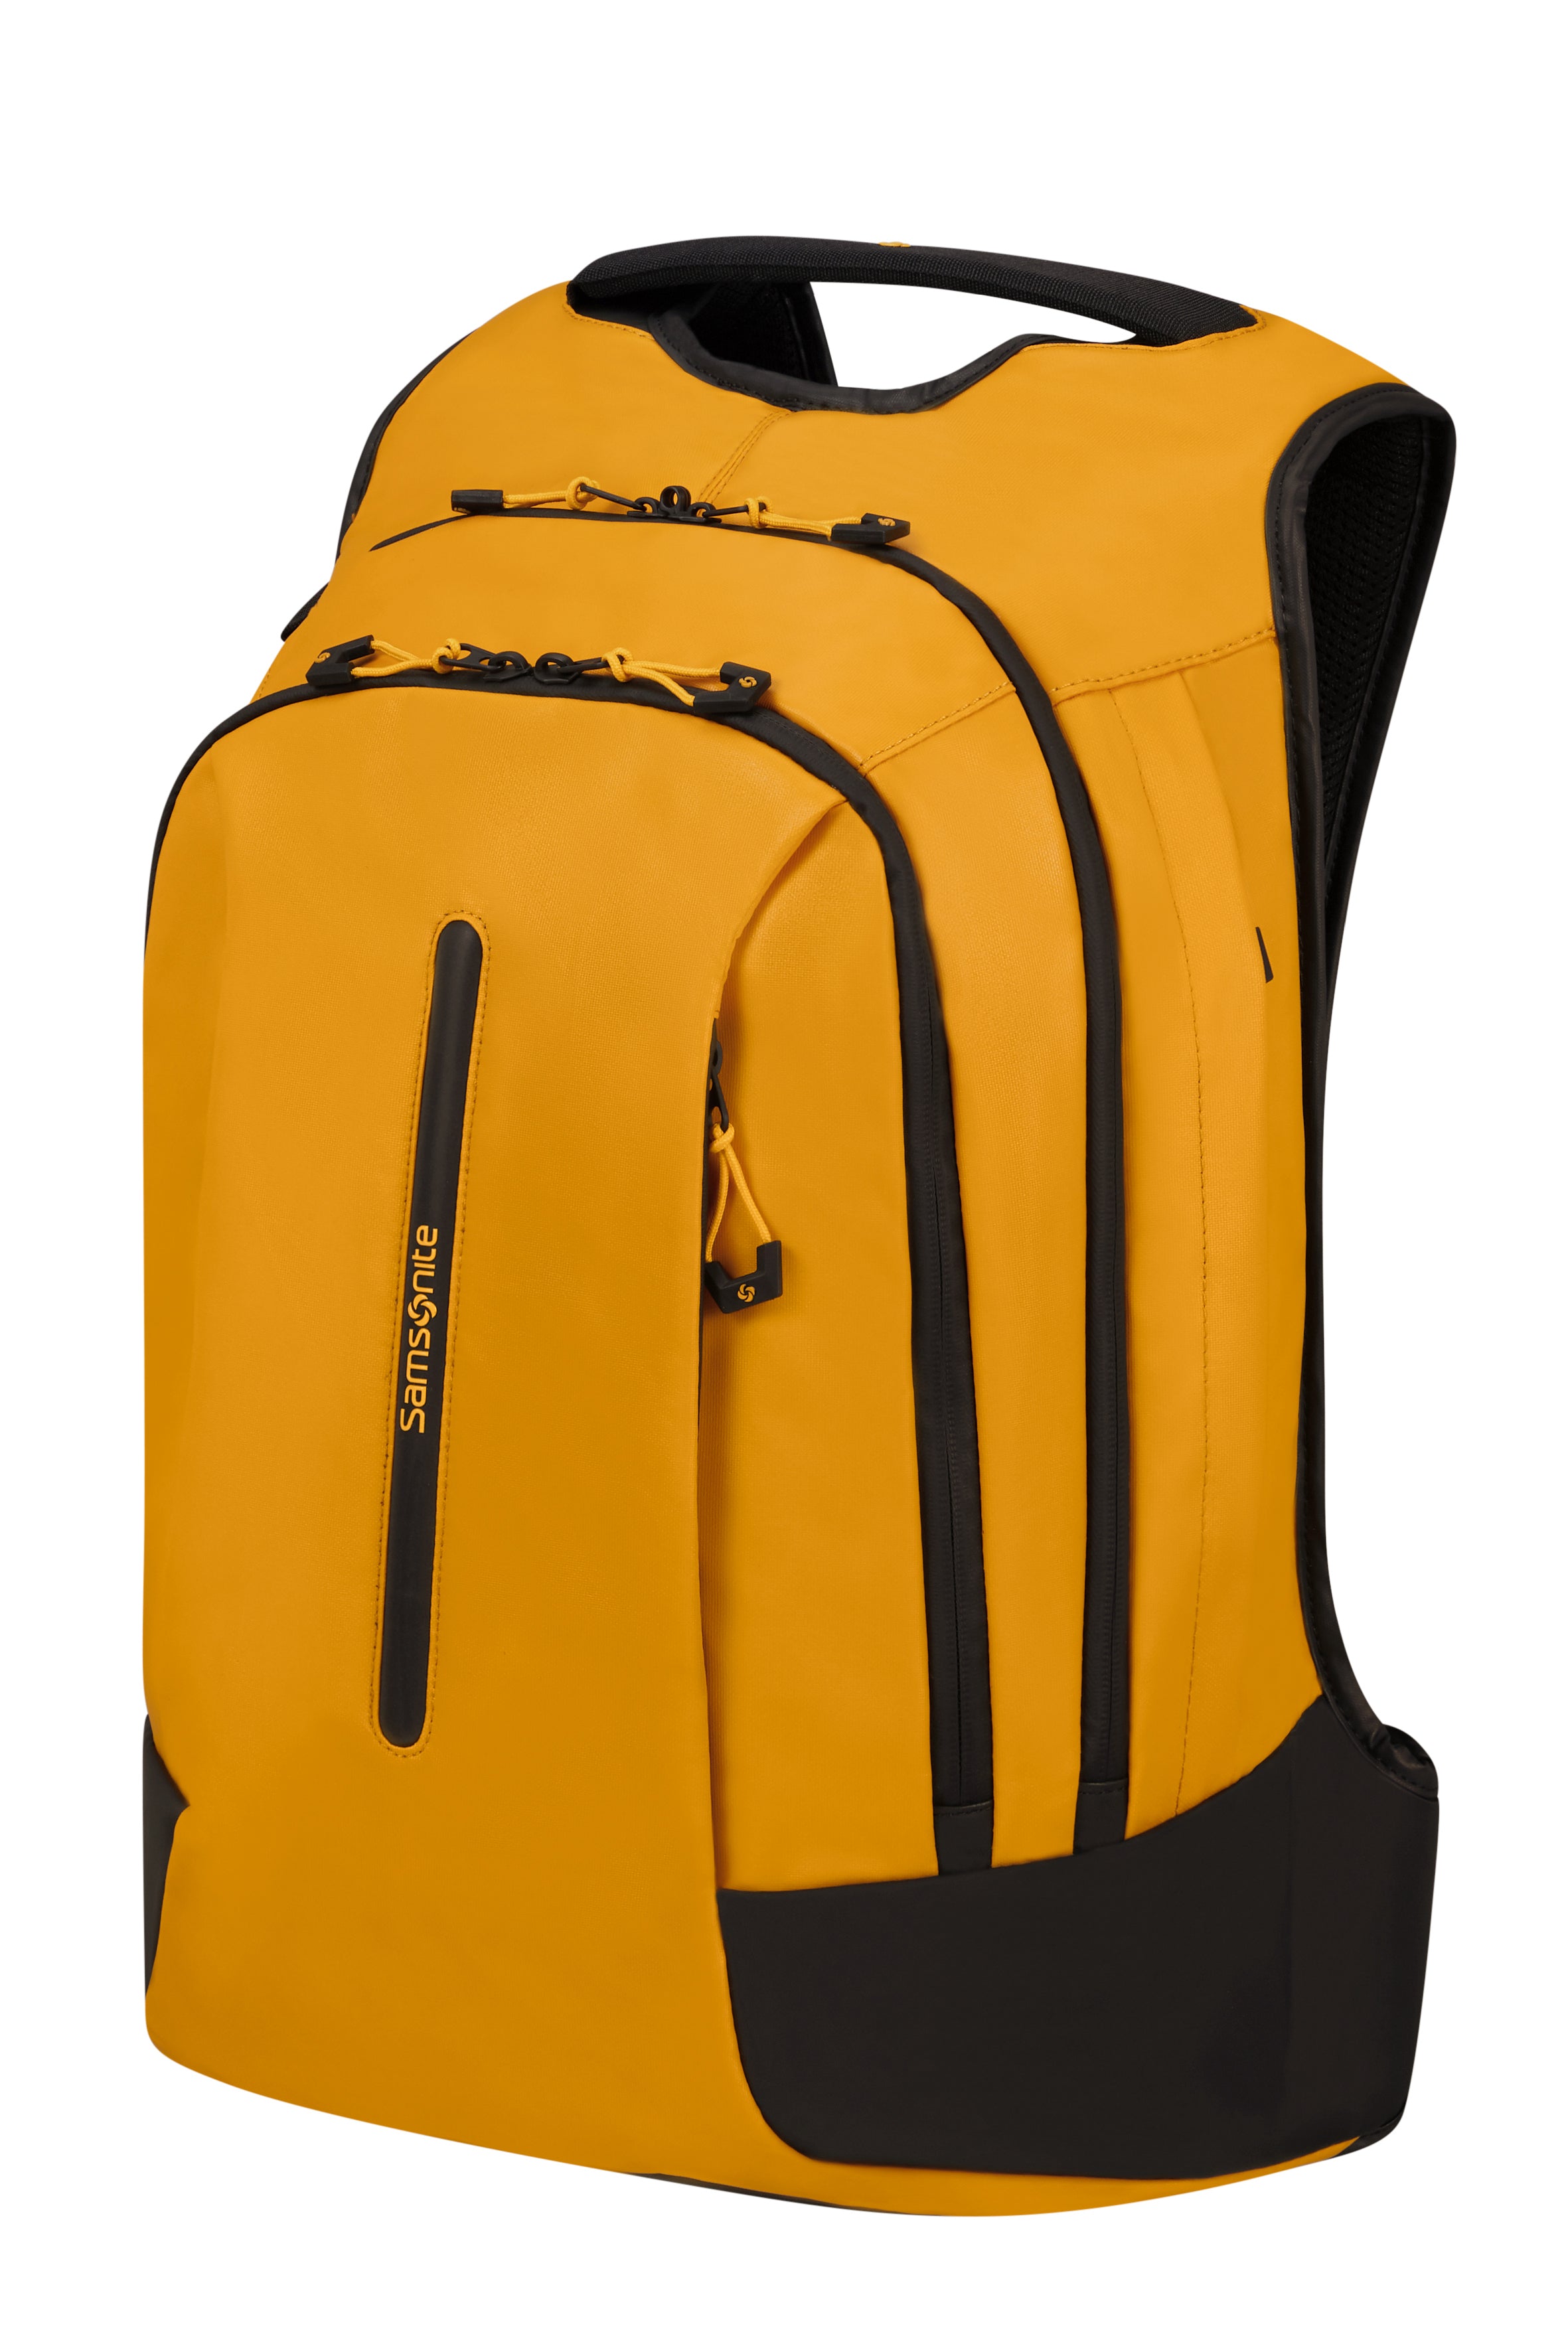 Samsonite Ecodiver Laptop Backpack Large